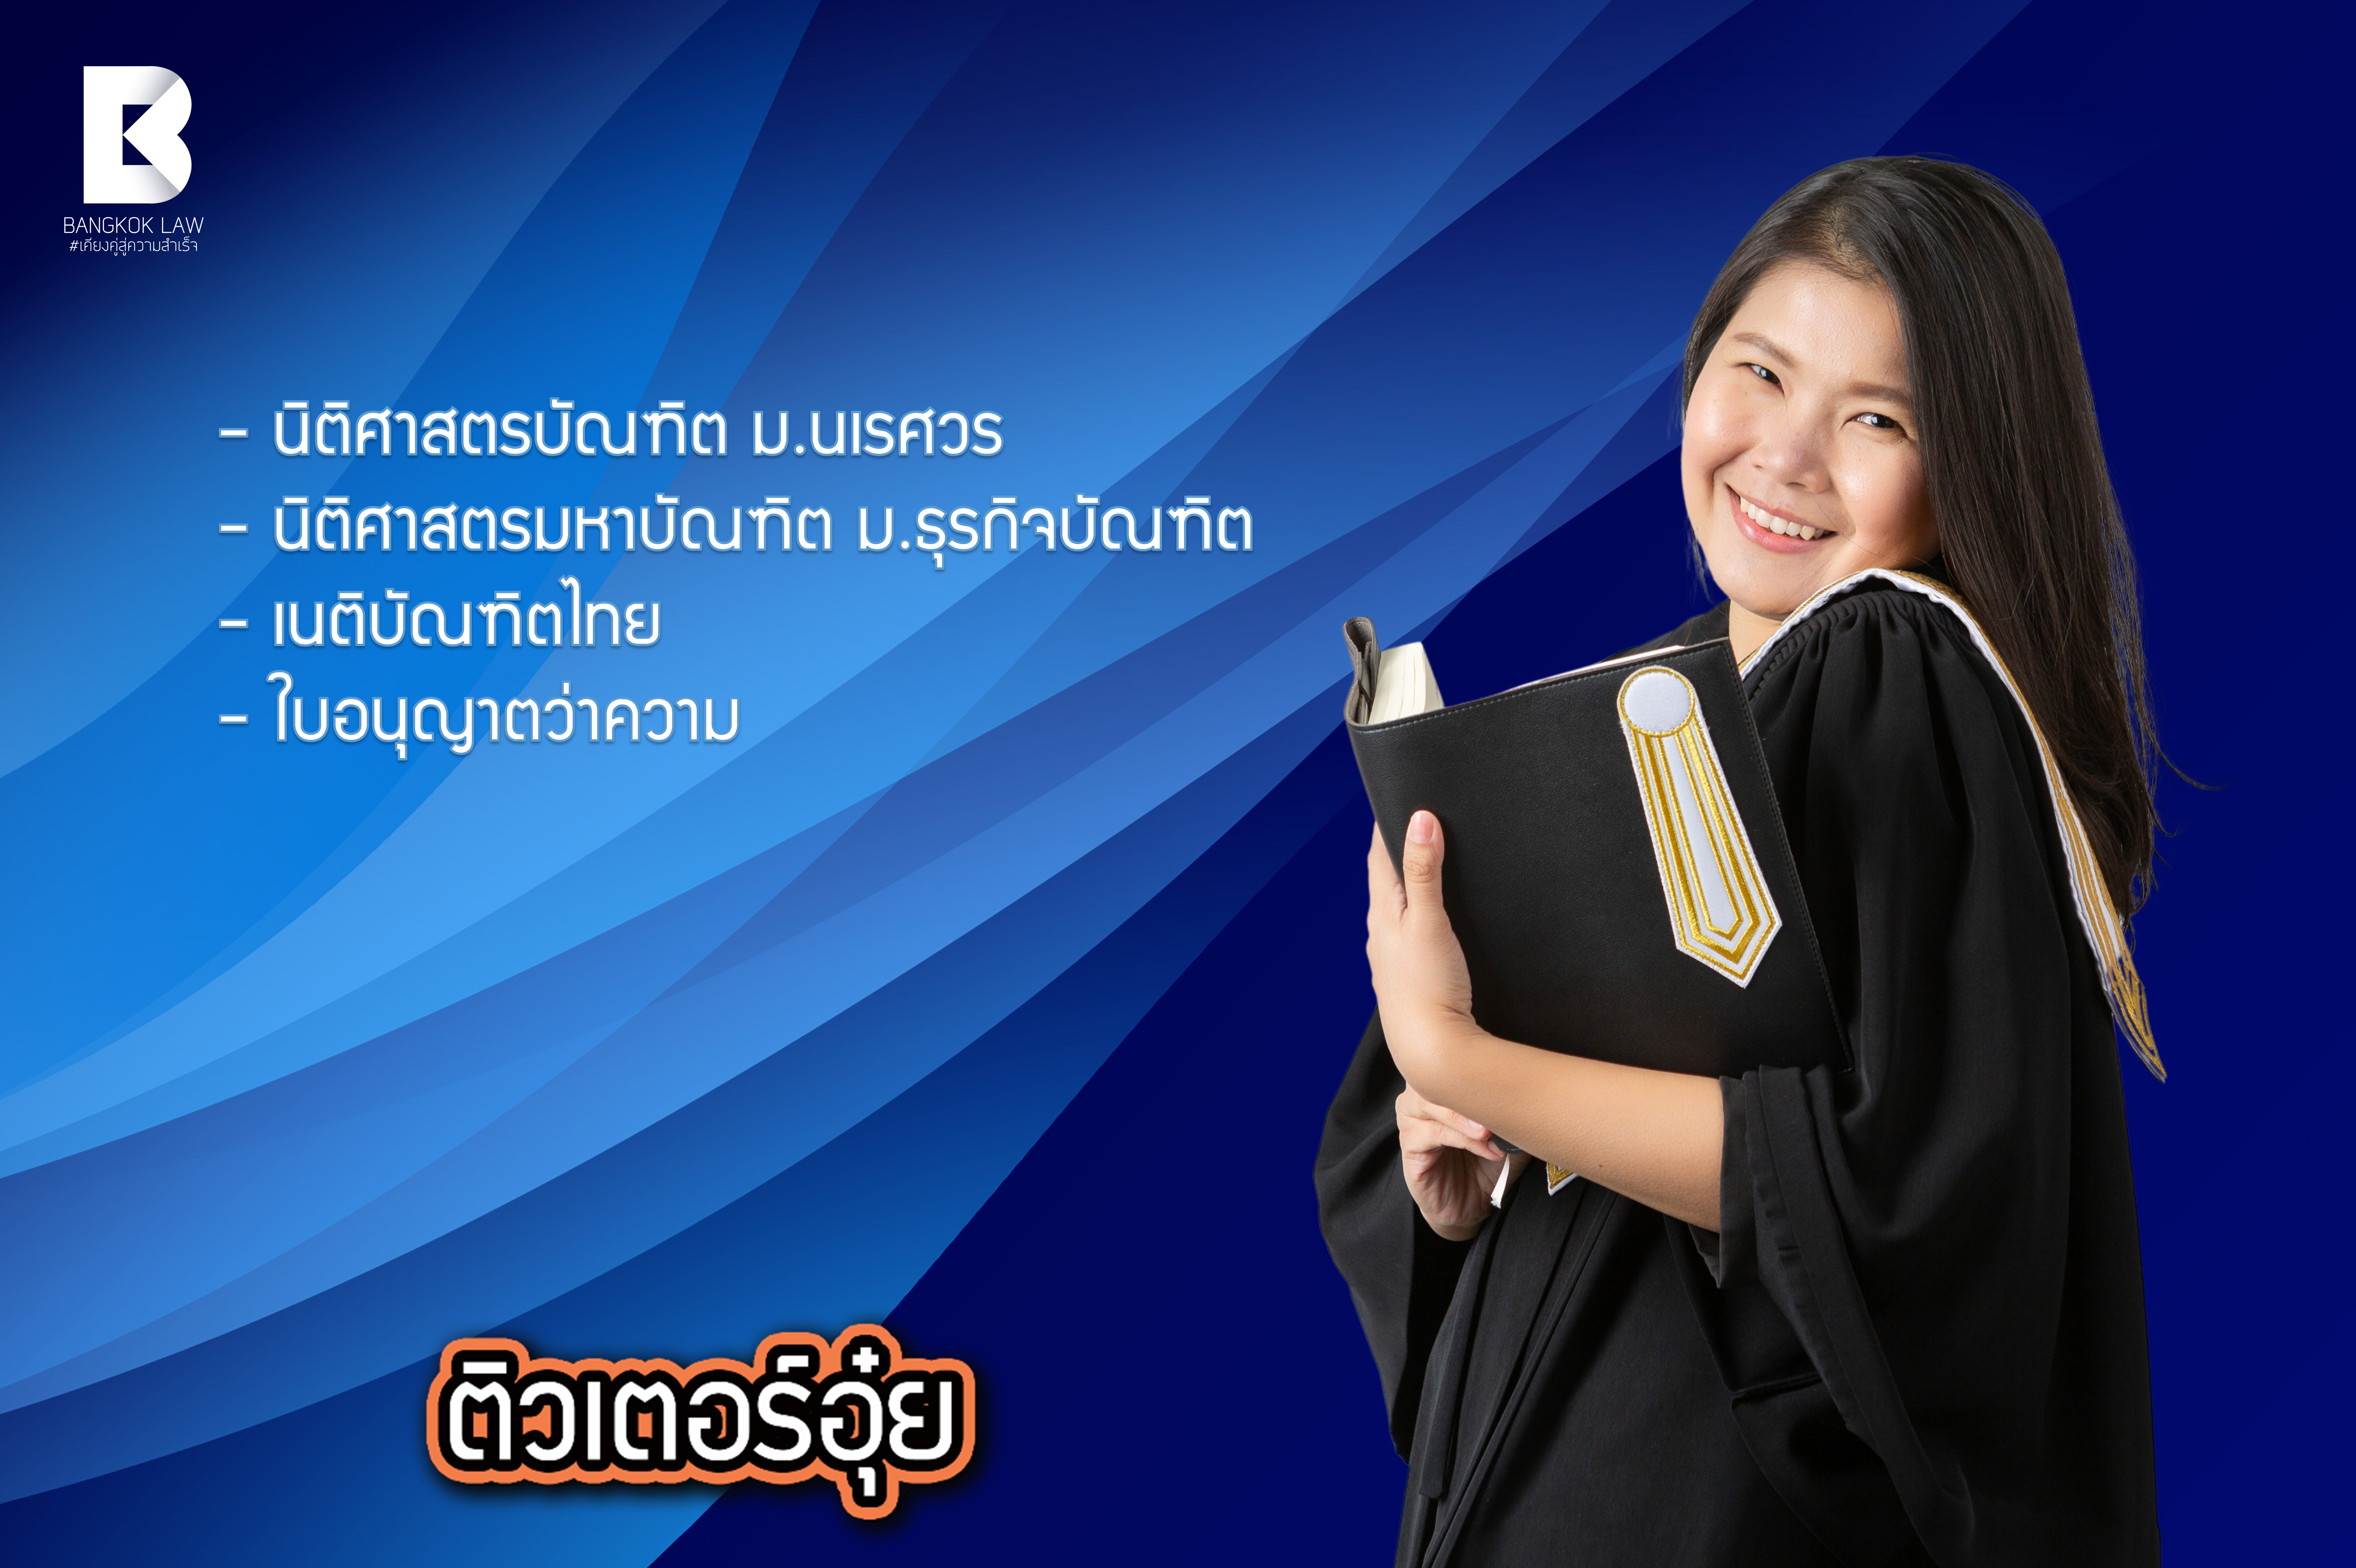 bangkoklaw adsvertisment